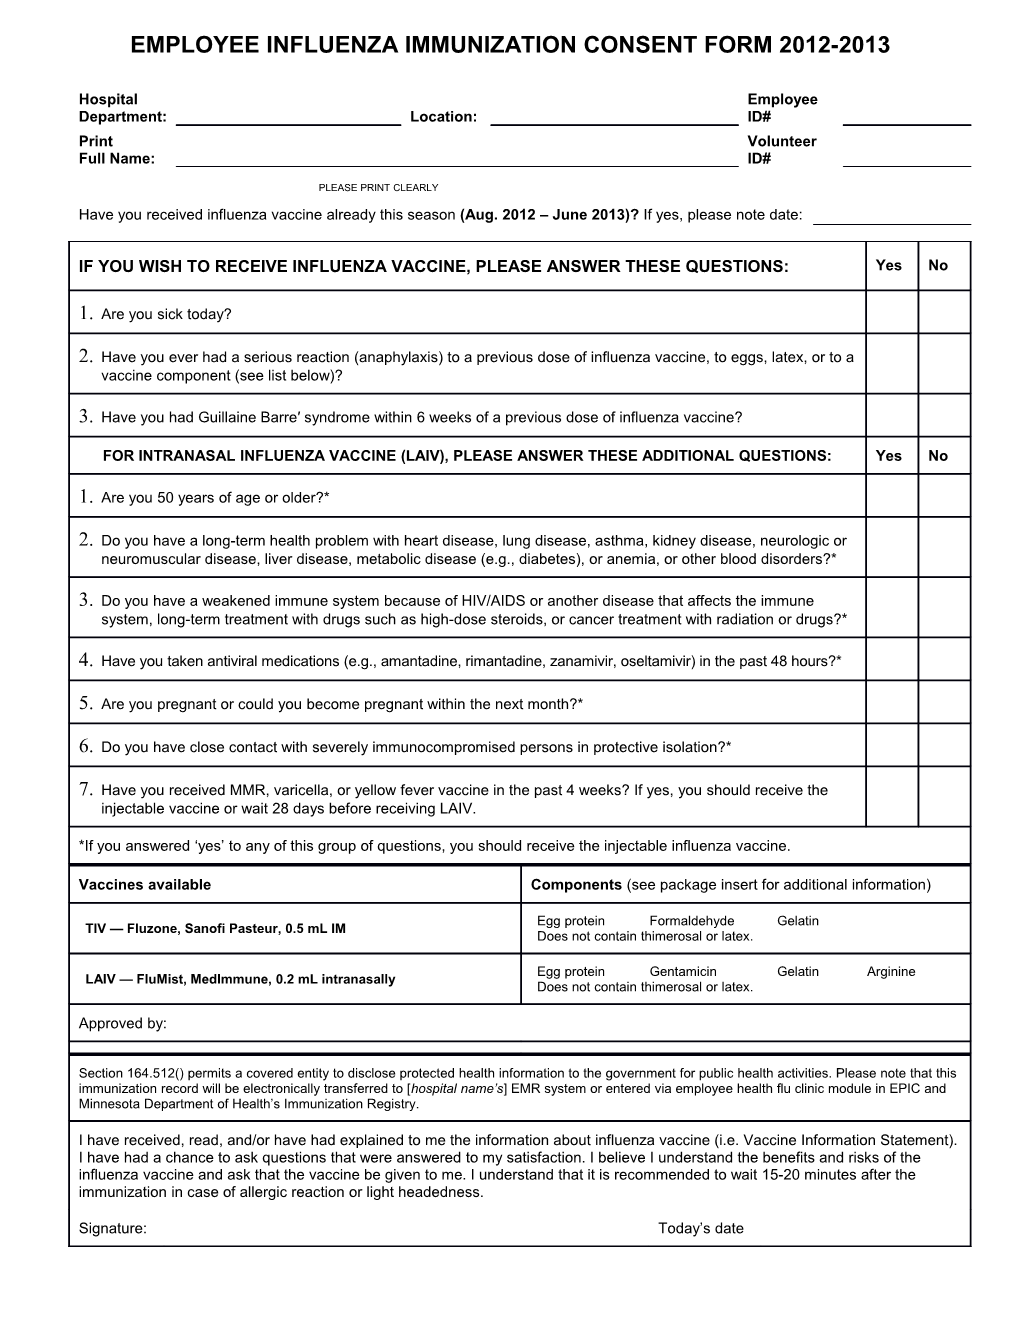 Employee Influenza Immunization Consent Form 2012-2013